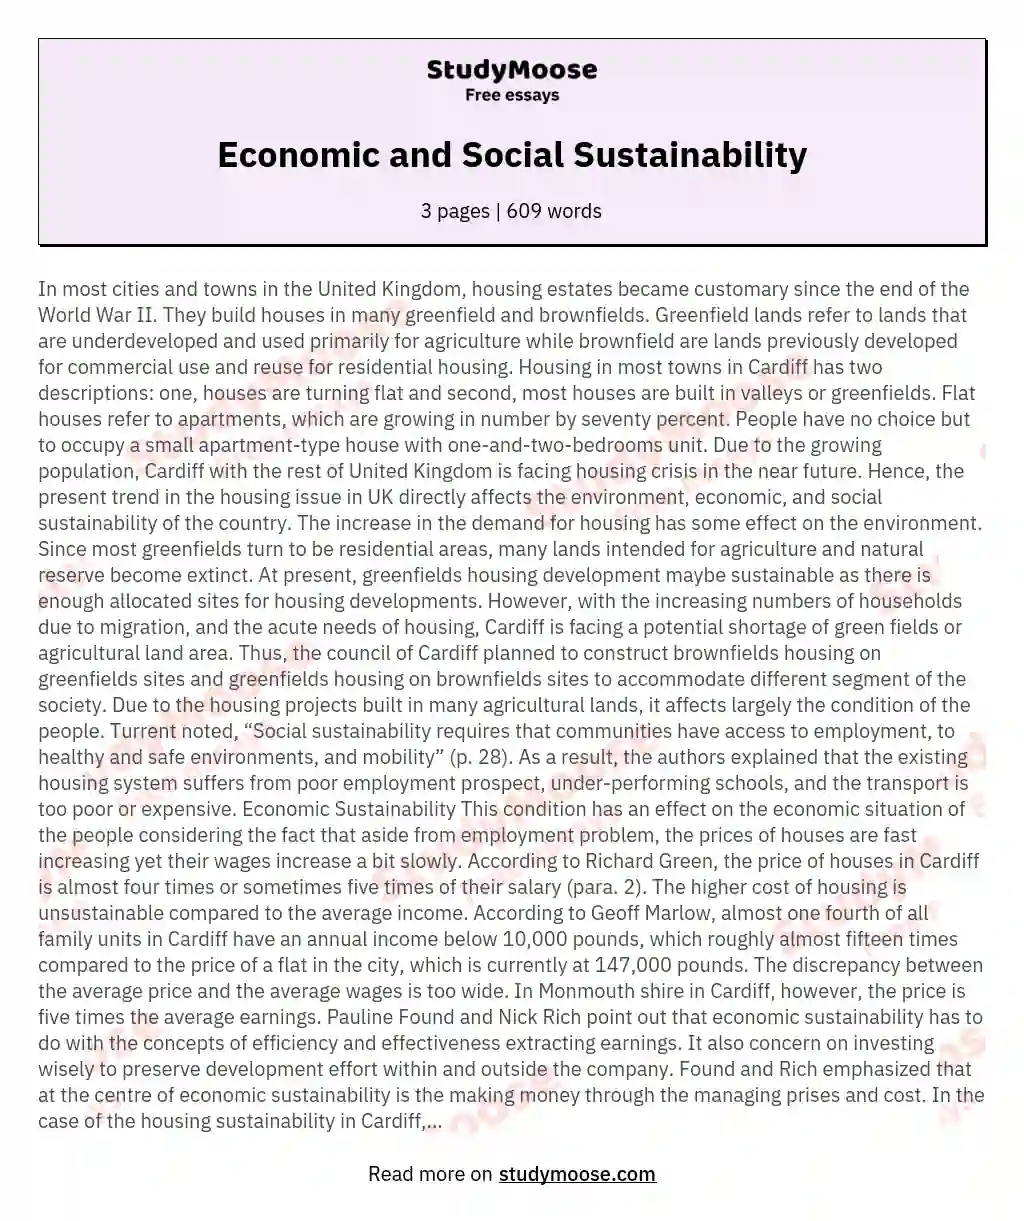 Economic and Social Sustainability essay